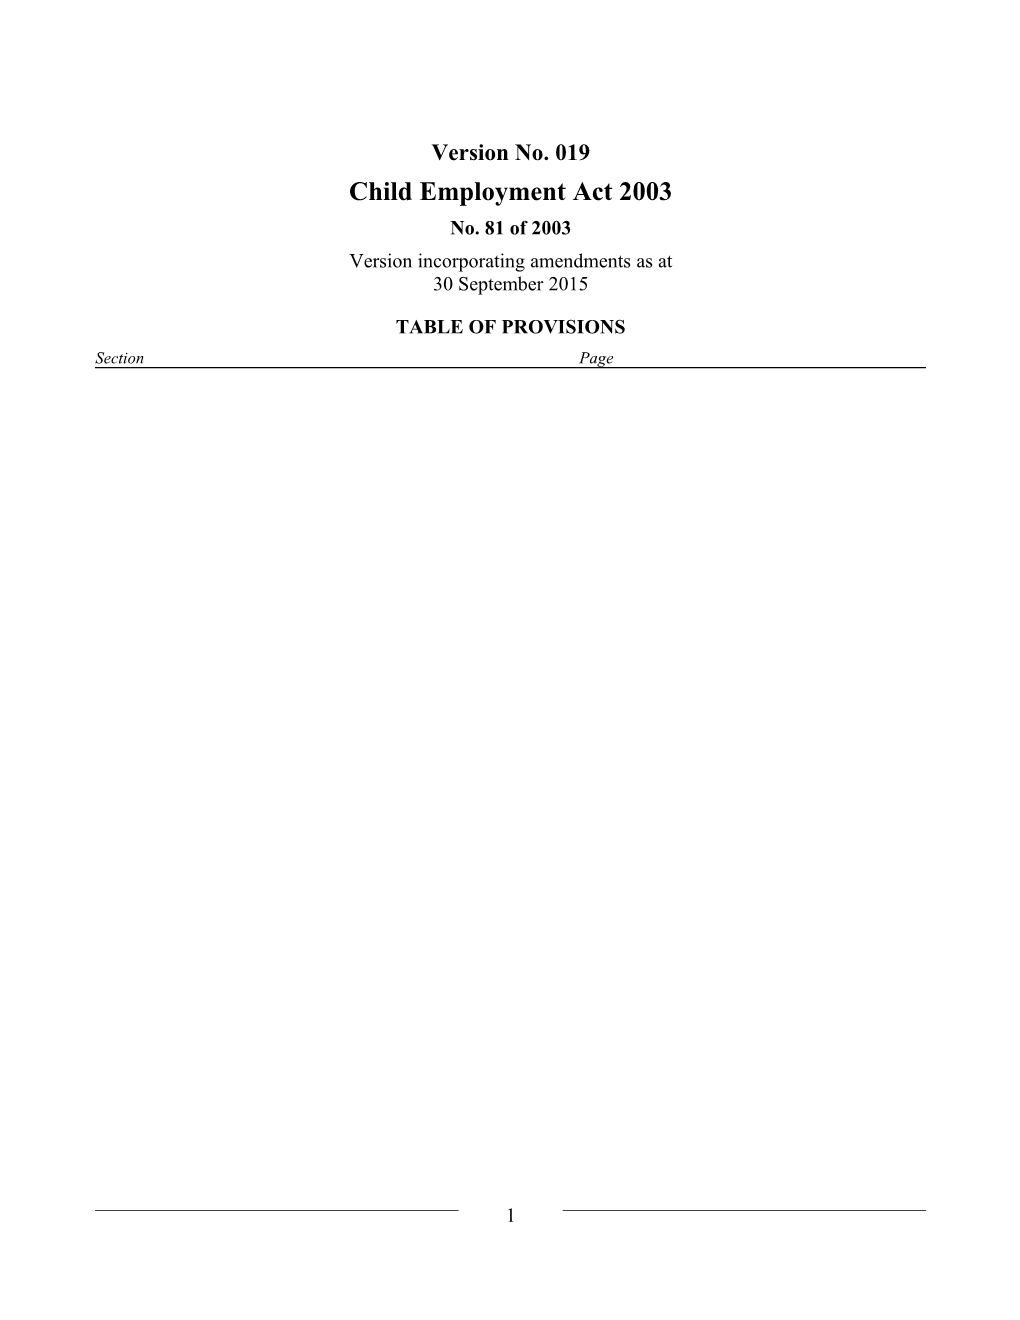 Child Employment Act 2003